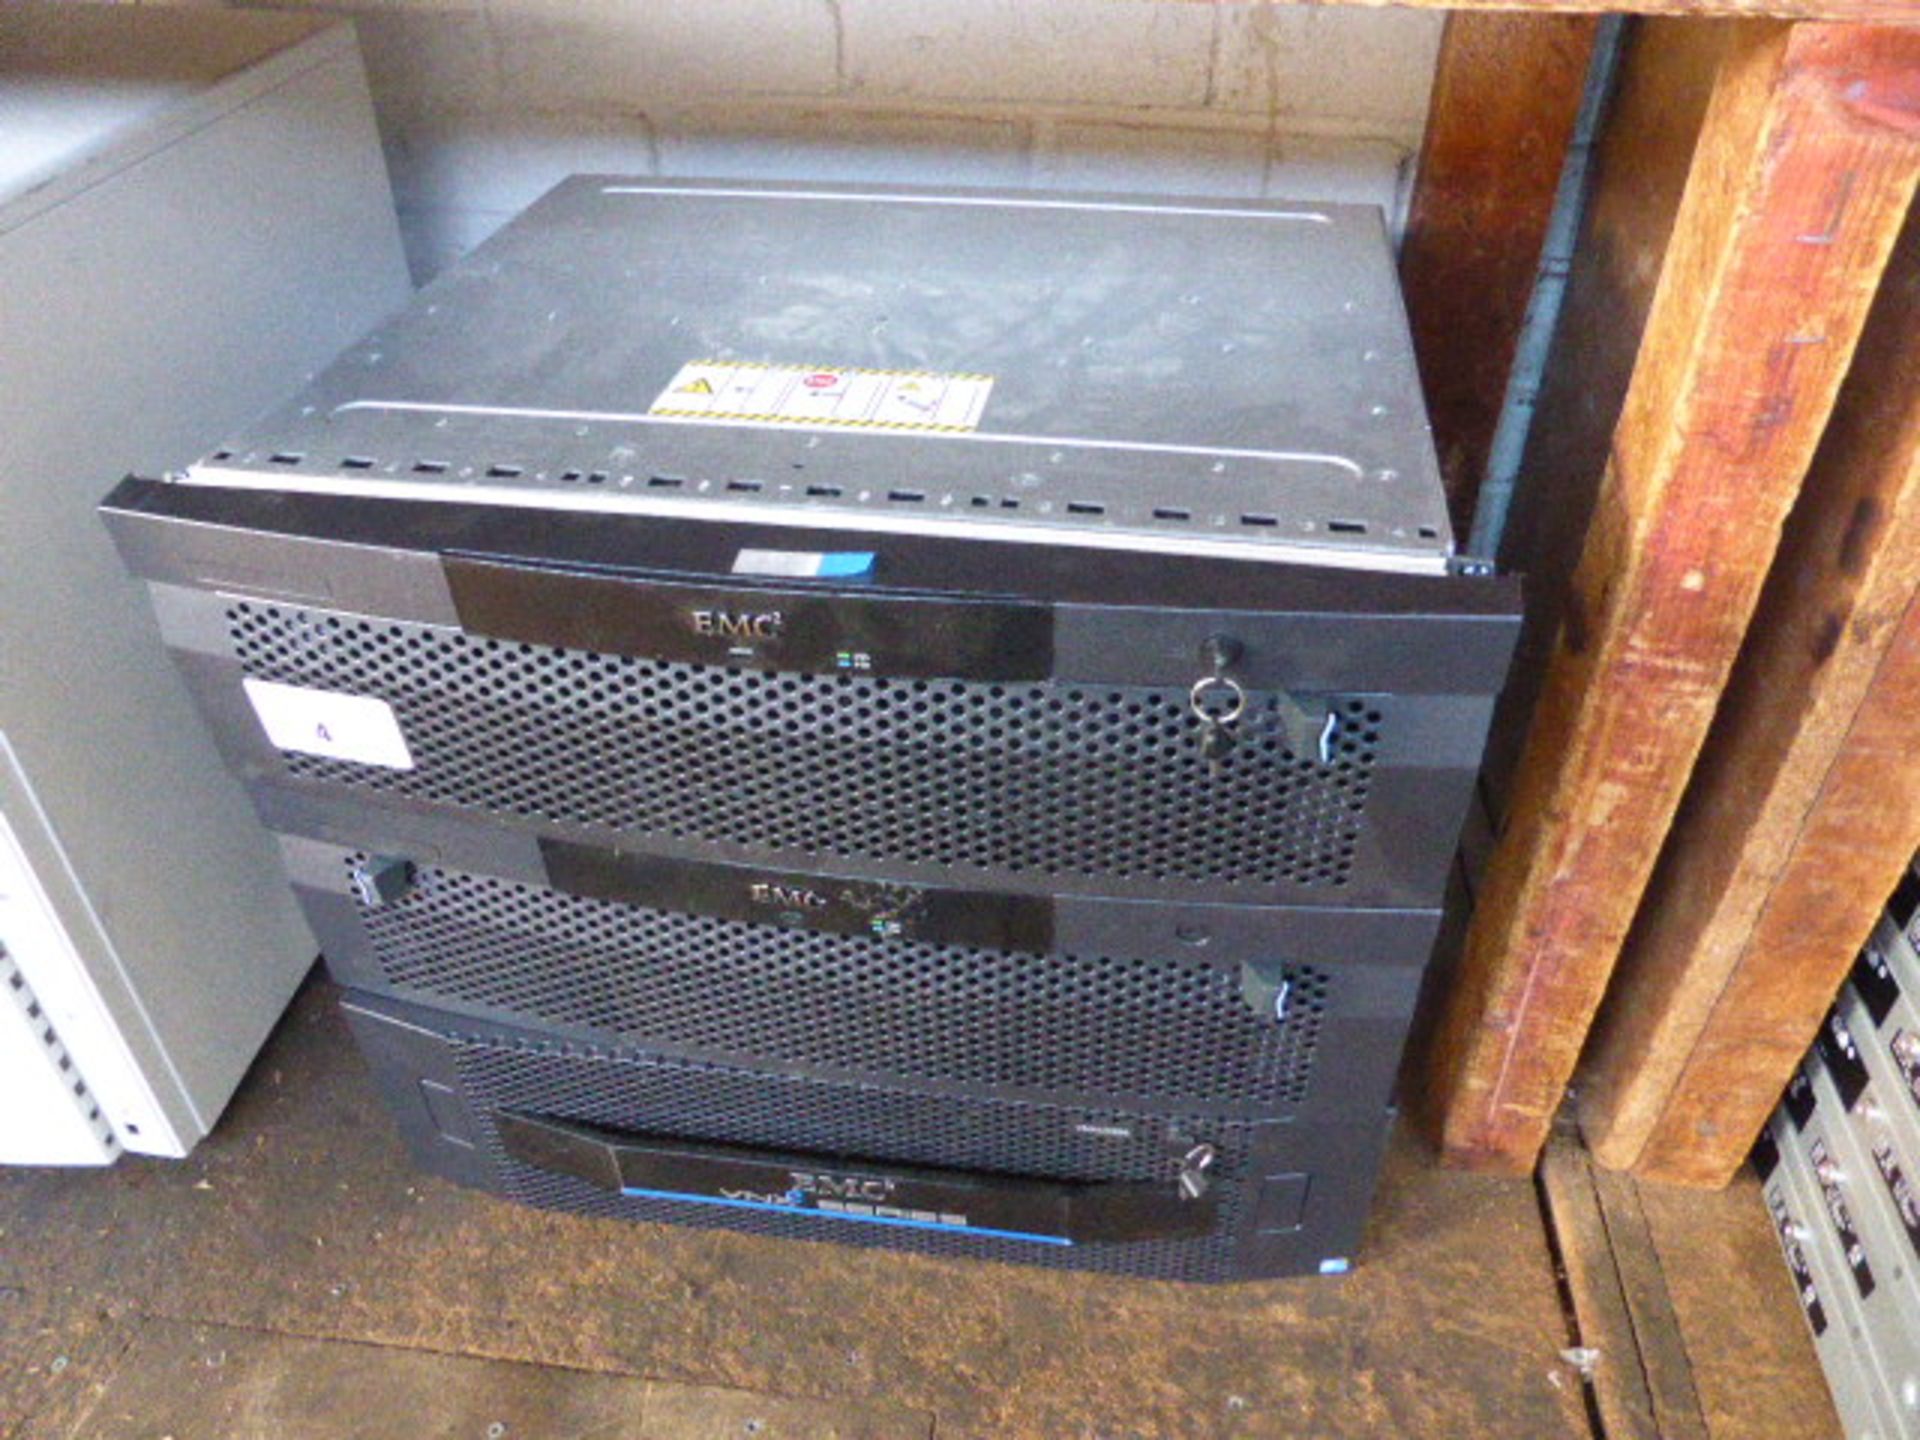 3 EMC² rack mounted servers no hard drives - Image 2 of 2